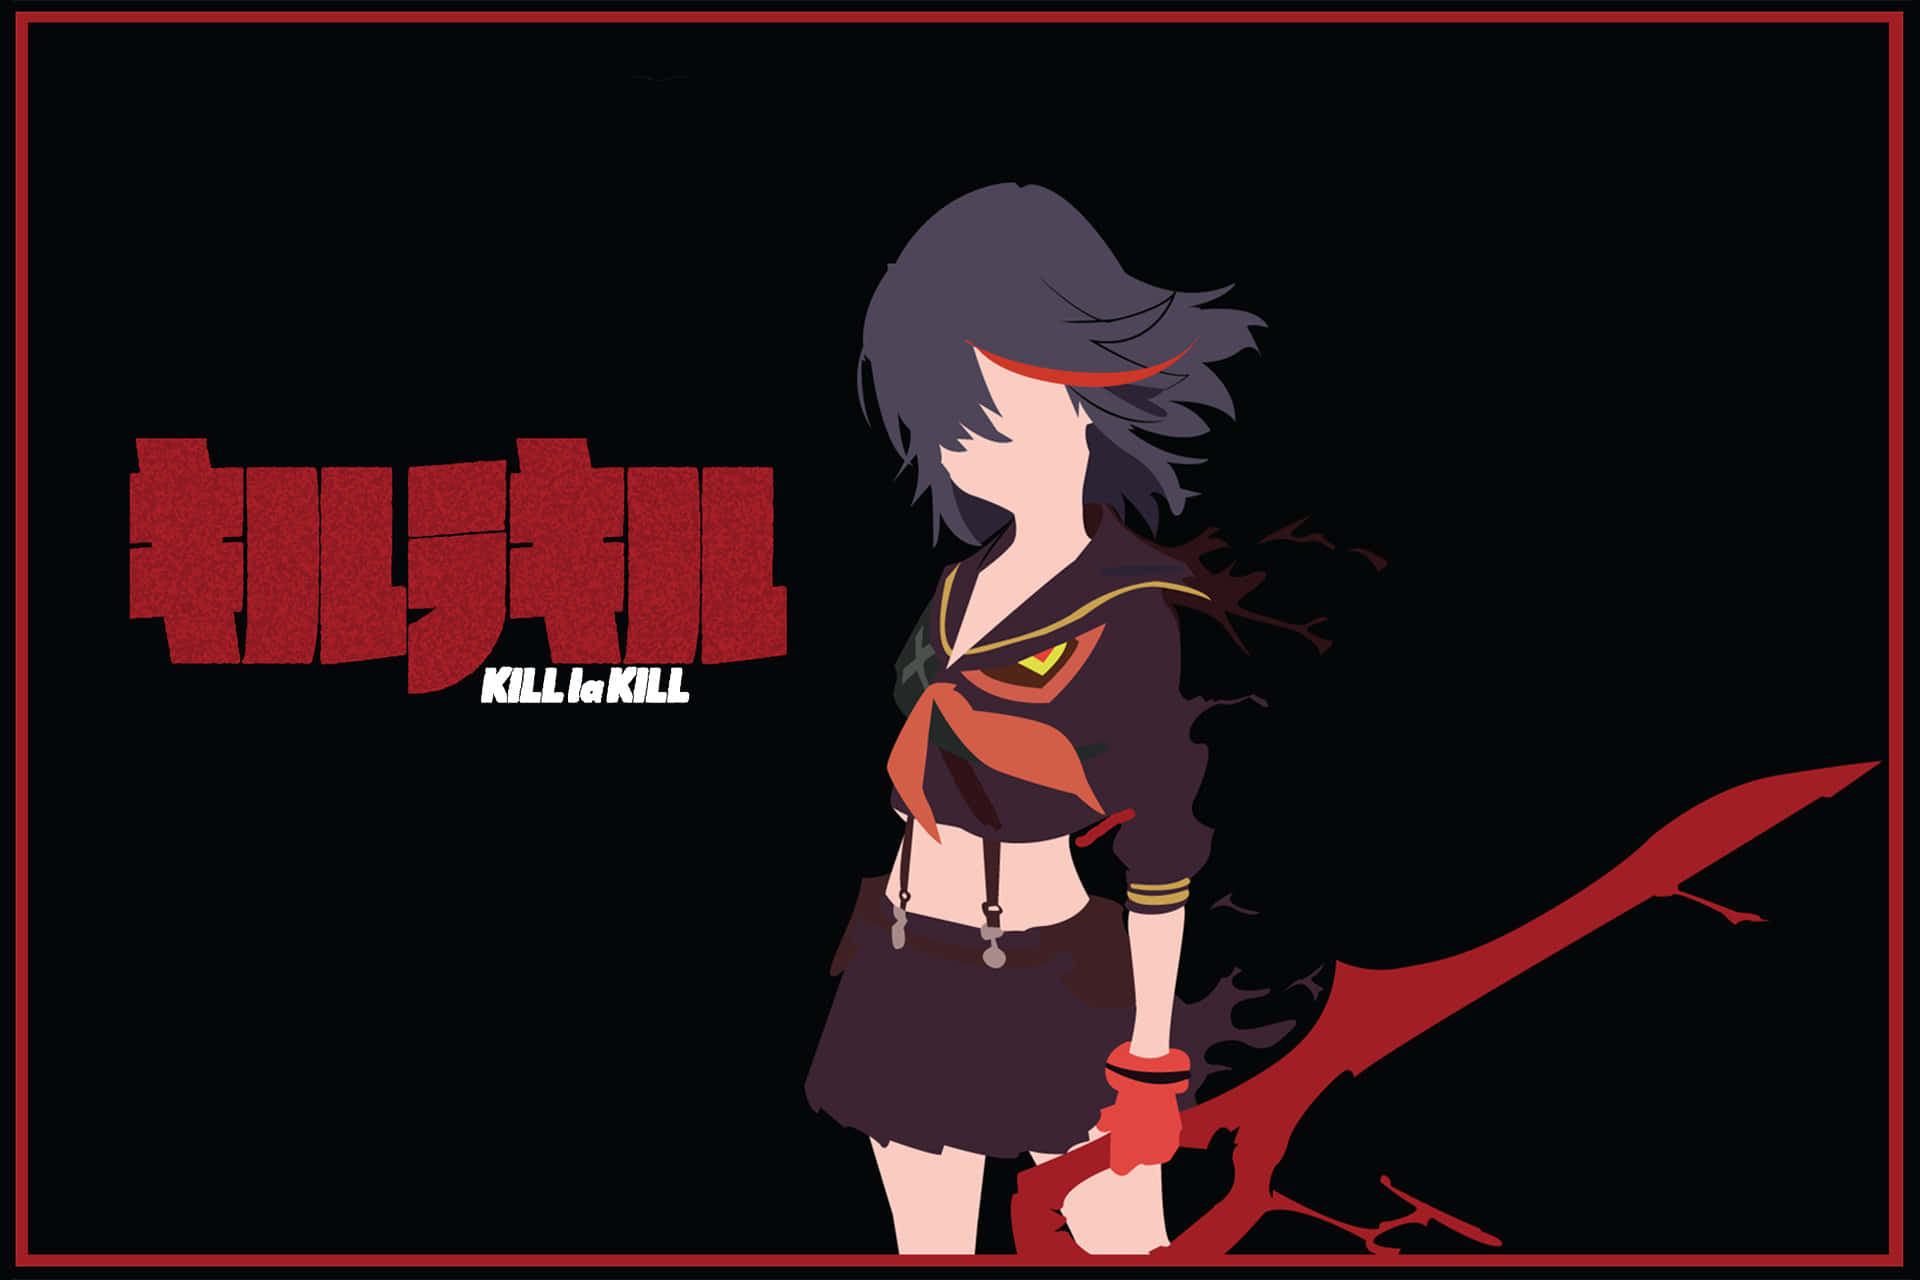 “Ryuko Matoi takes on a world of enemies in Kill La Kill”